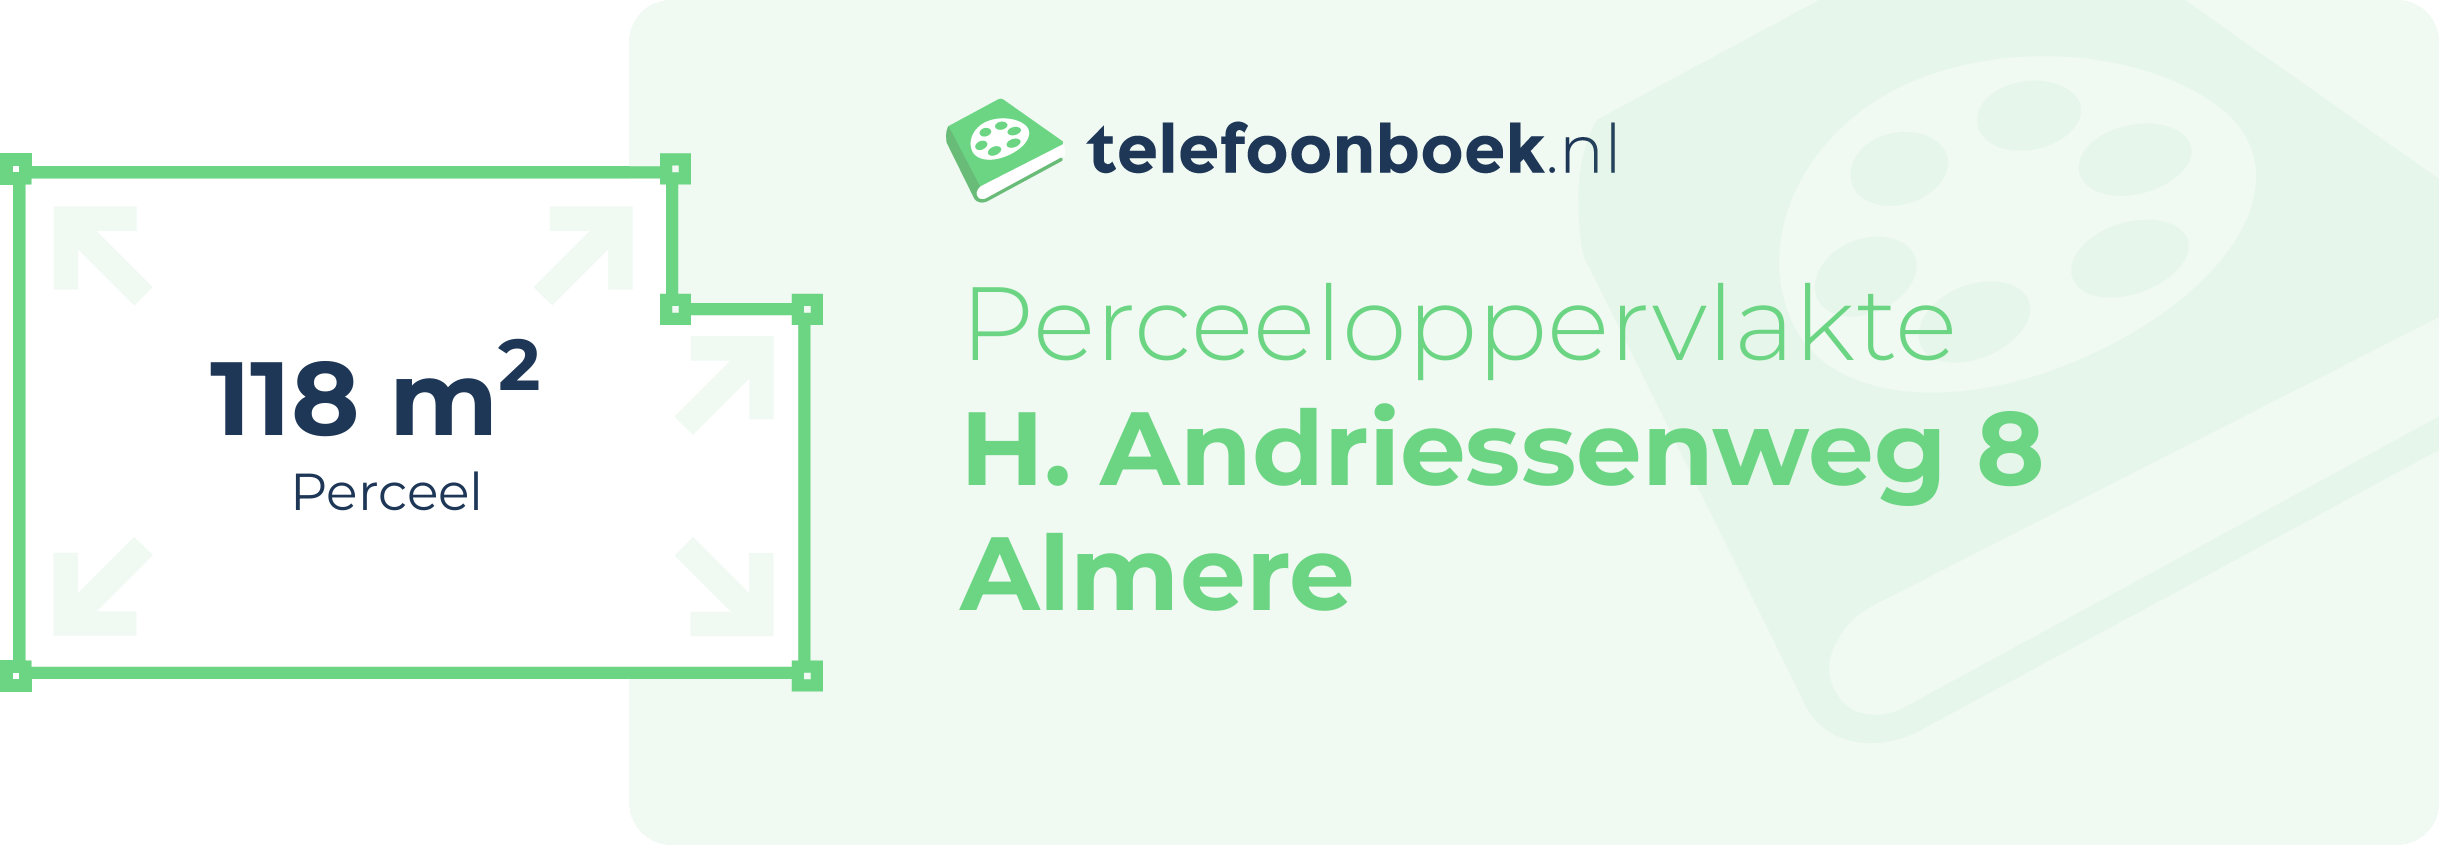 Perceeloppervlakte H. Andriessenweg 8 Almere